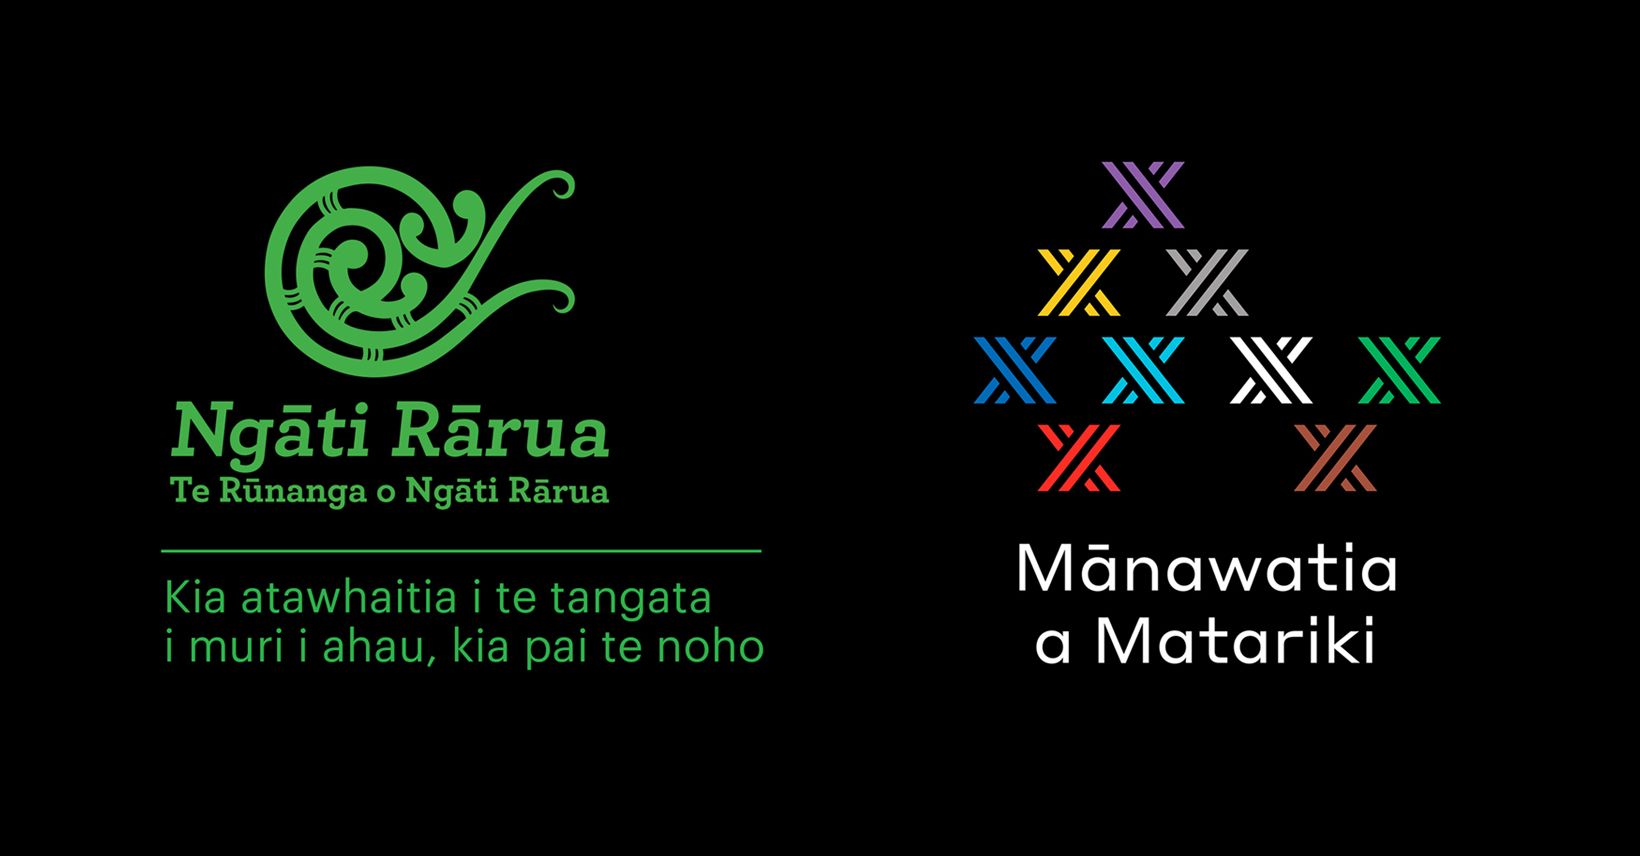 Mānawatia A Matariki:  a time to celebrate, discover traditions